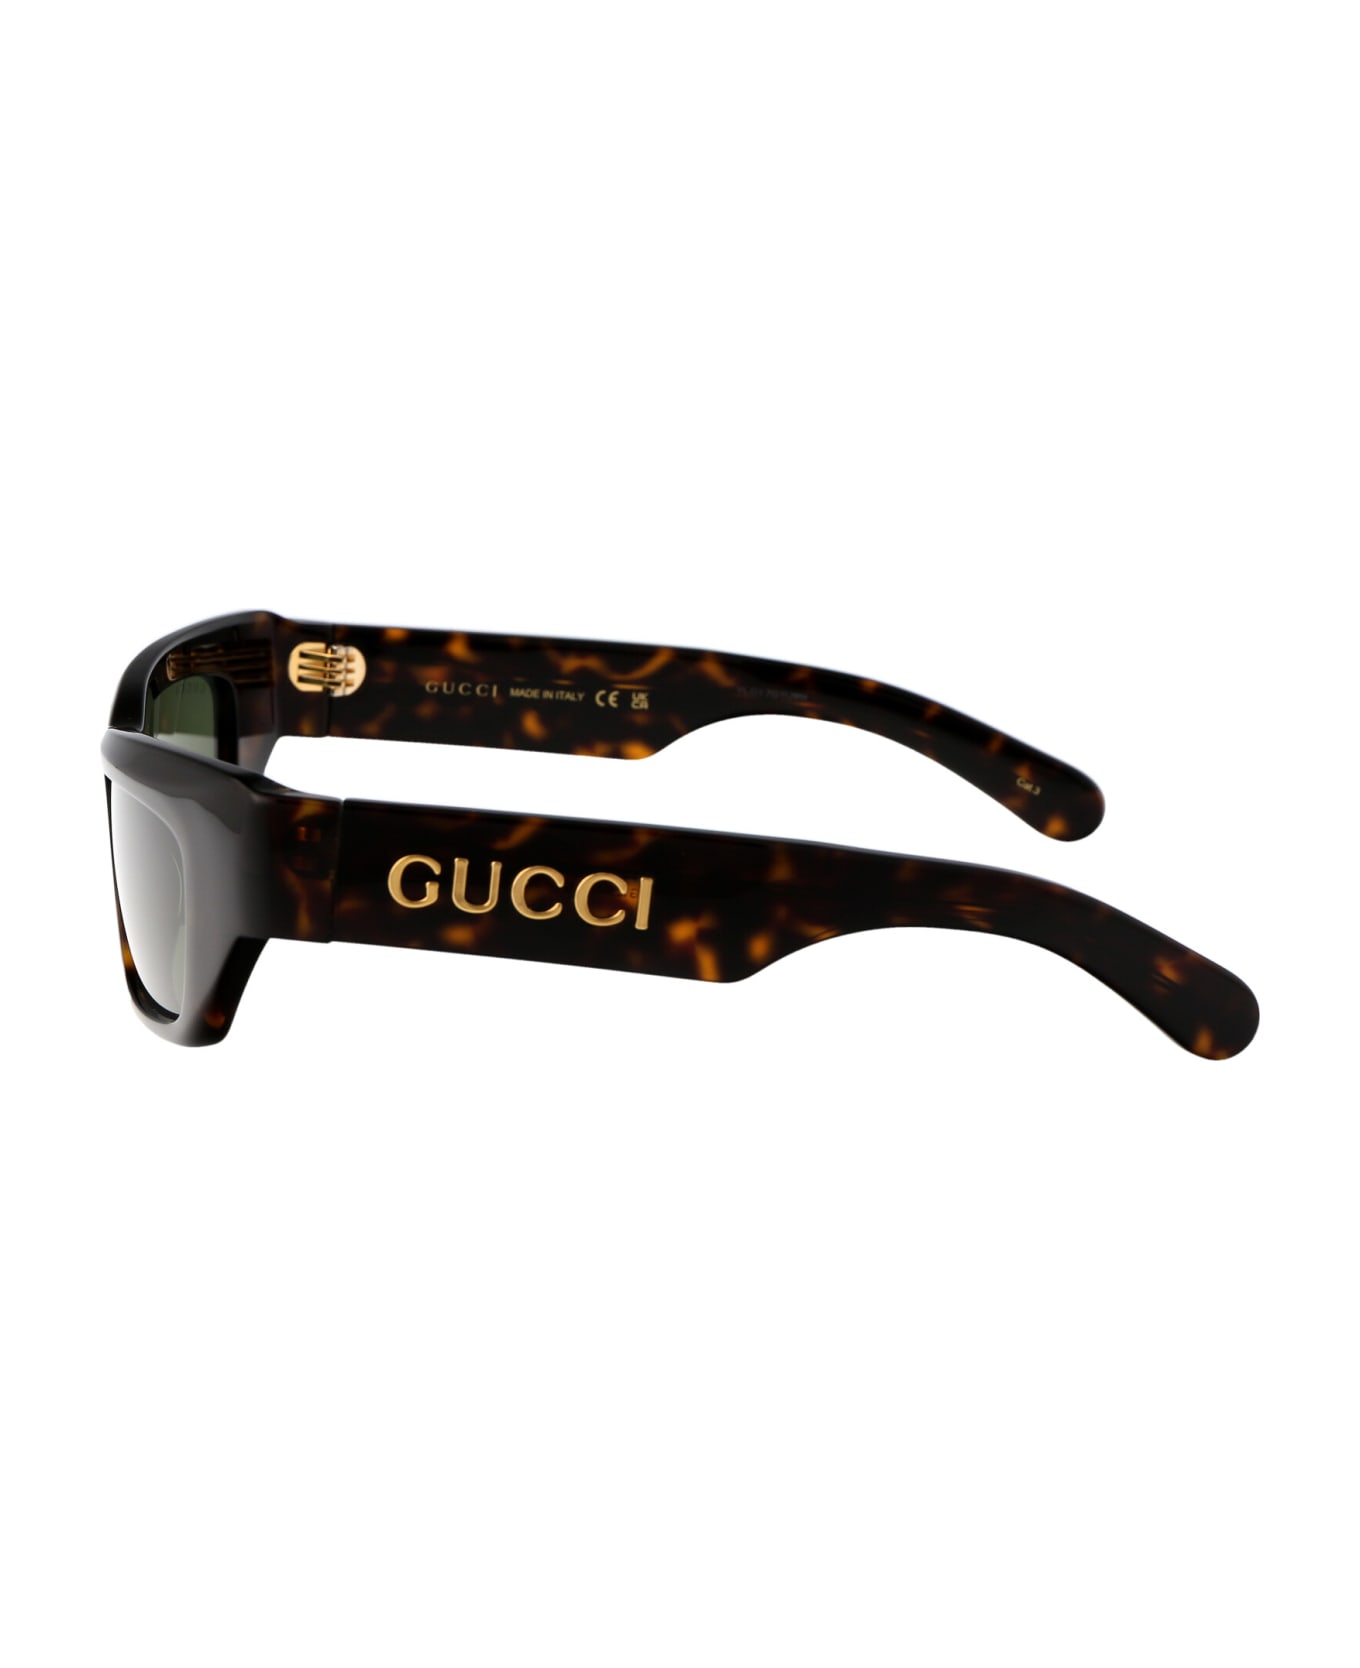 Gucci Eyewear Gg1296s Sunglasses - 004 HAVANA HAVANA GREEN